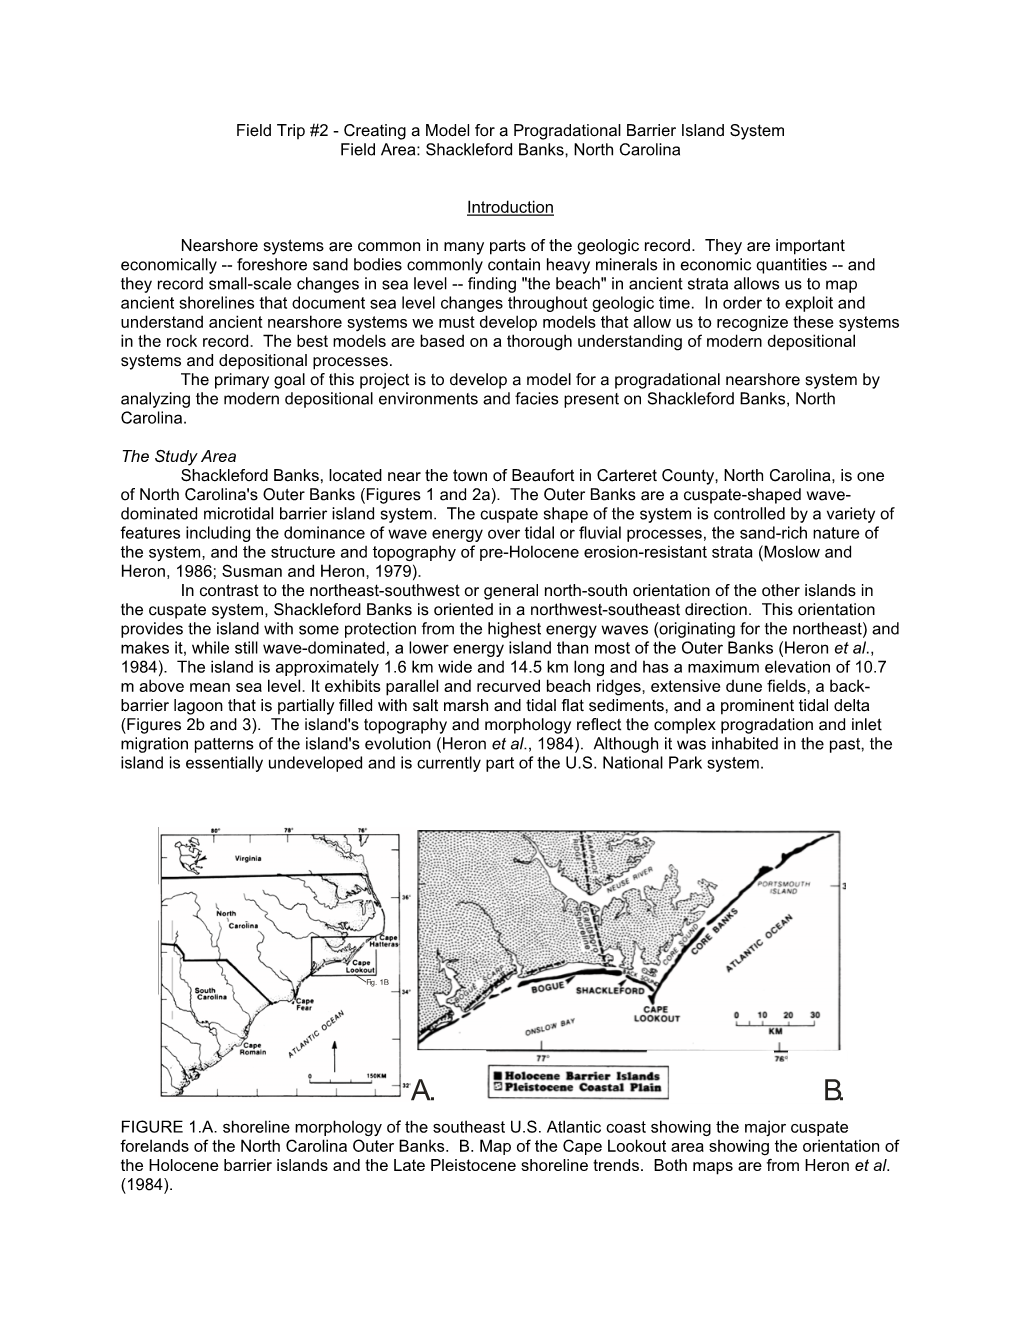 Creating a Model for a Progradational Barrier Island System Field Area: Shackleford Banks, North Carolina